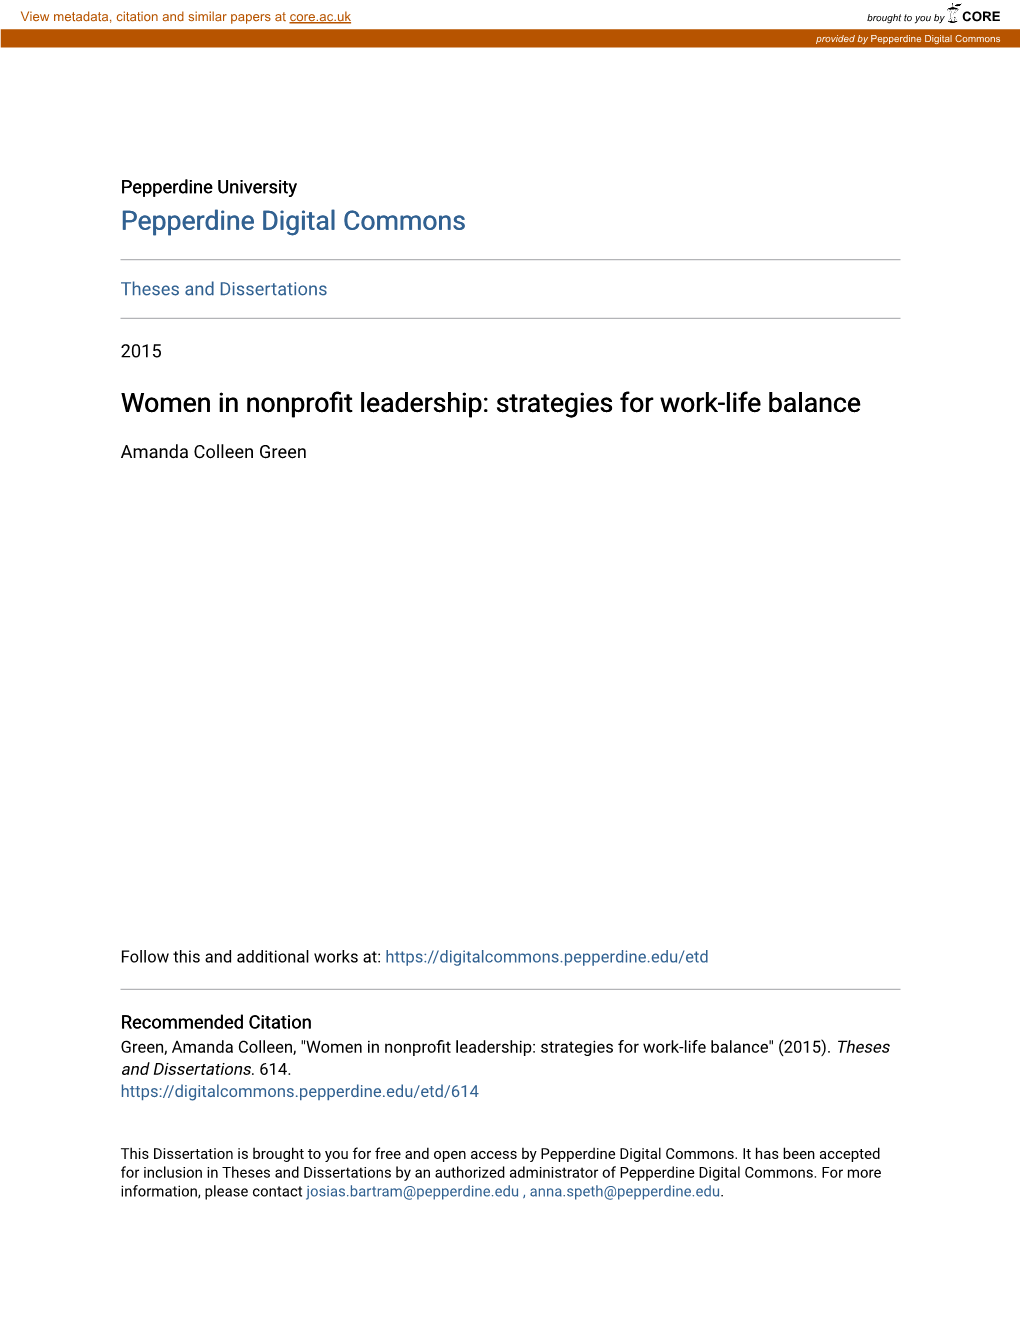 Women in Nonprofit Leadership: Strategies for Work-Life Balance